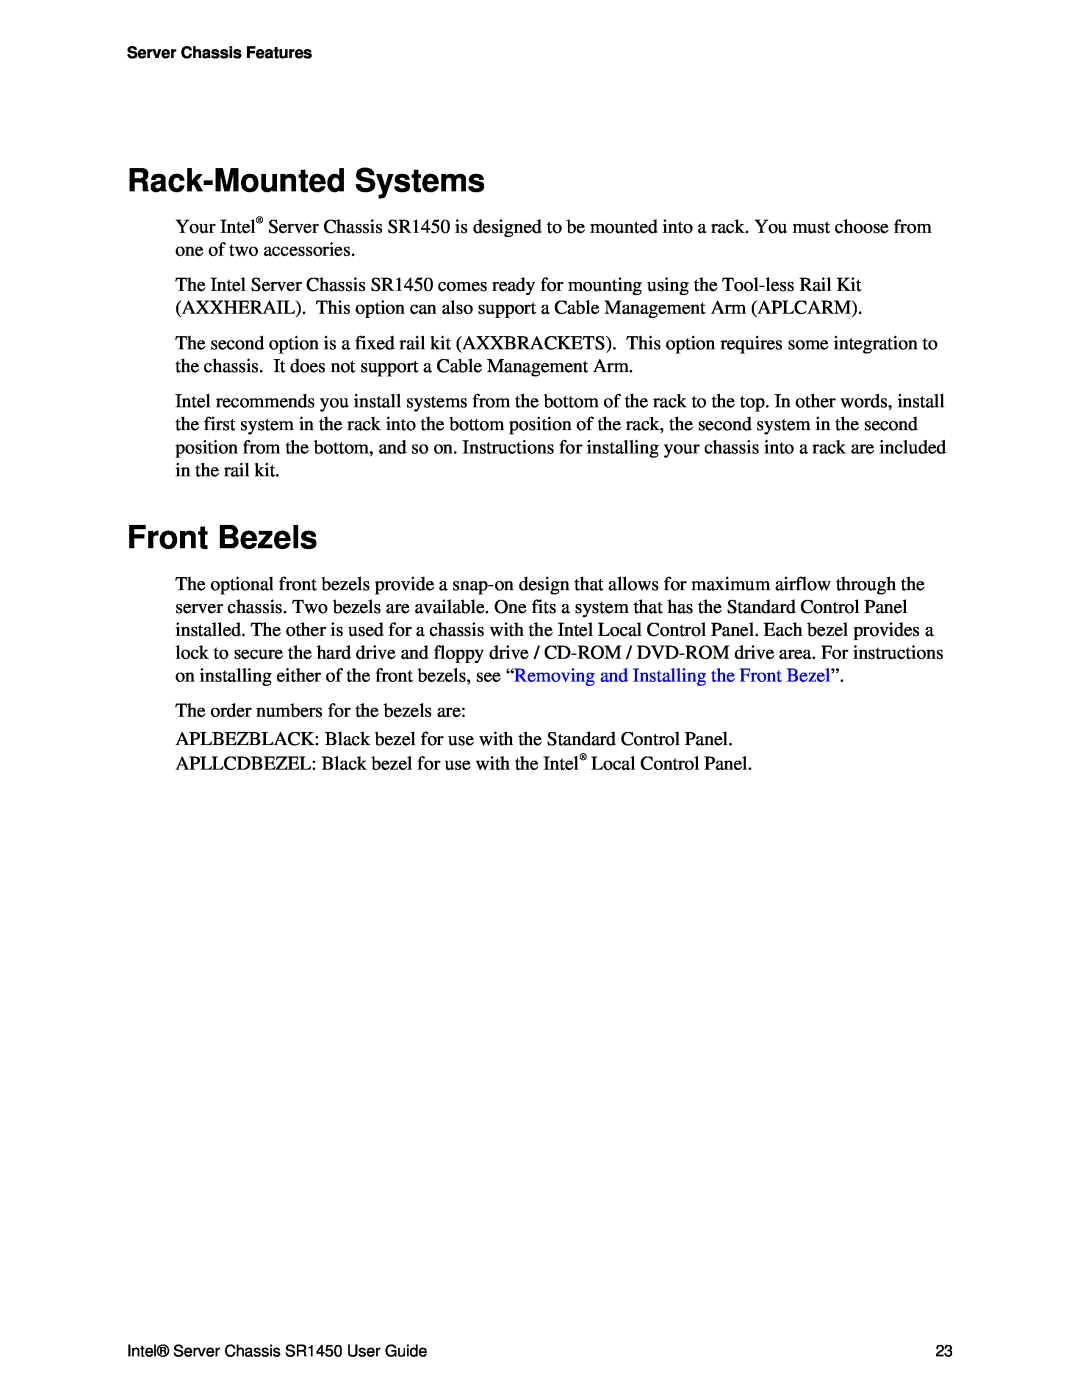 Intel SR1450 manual Rack-MountedSystems, Front Bezels 